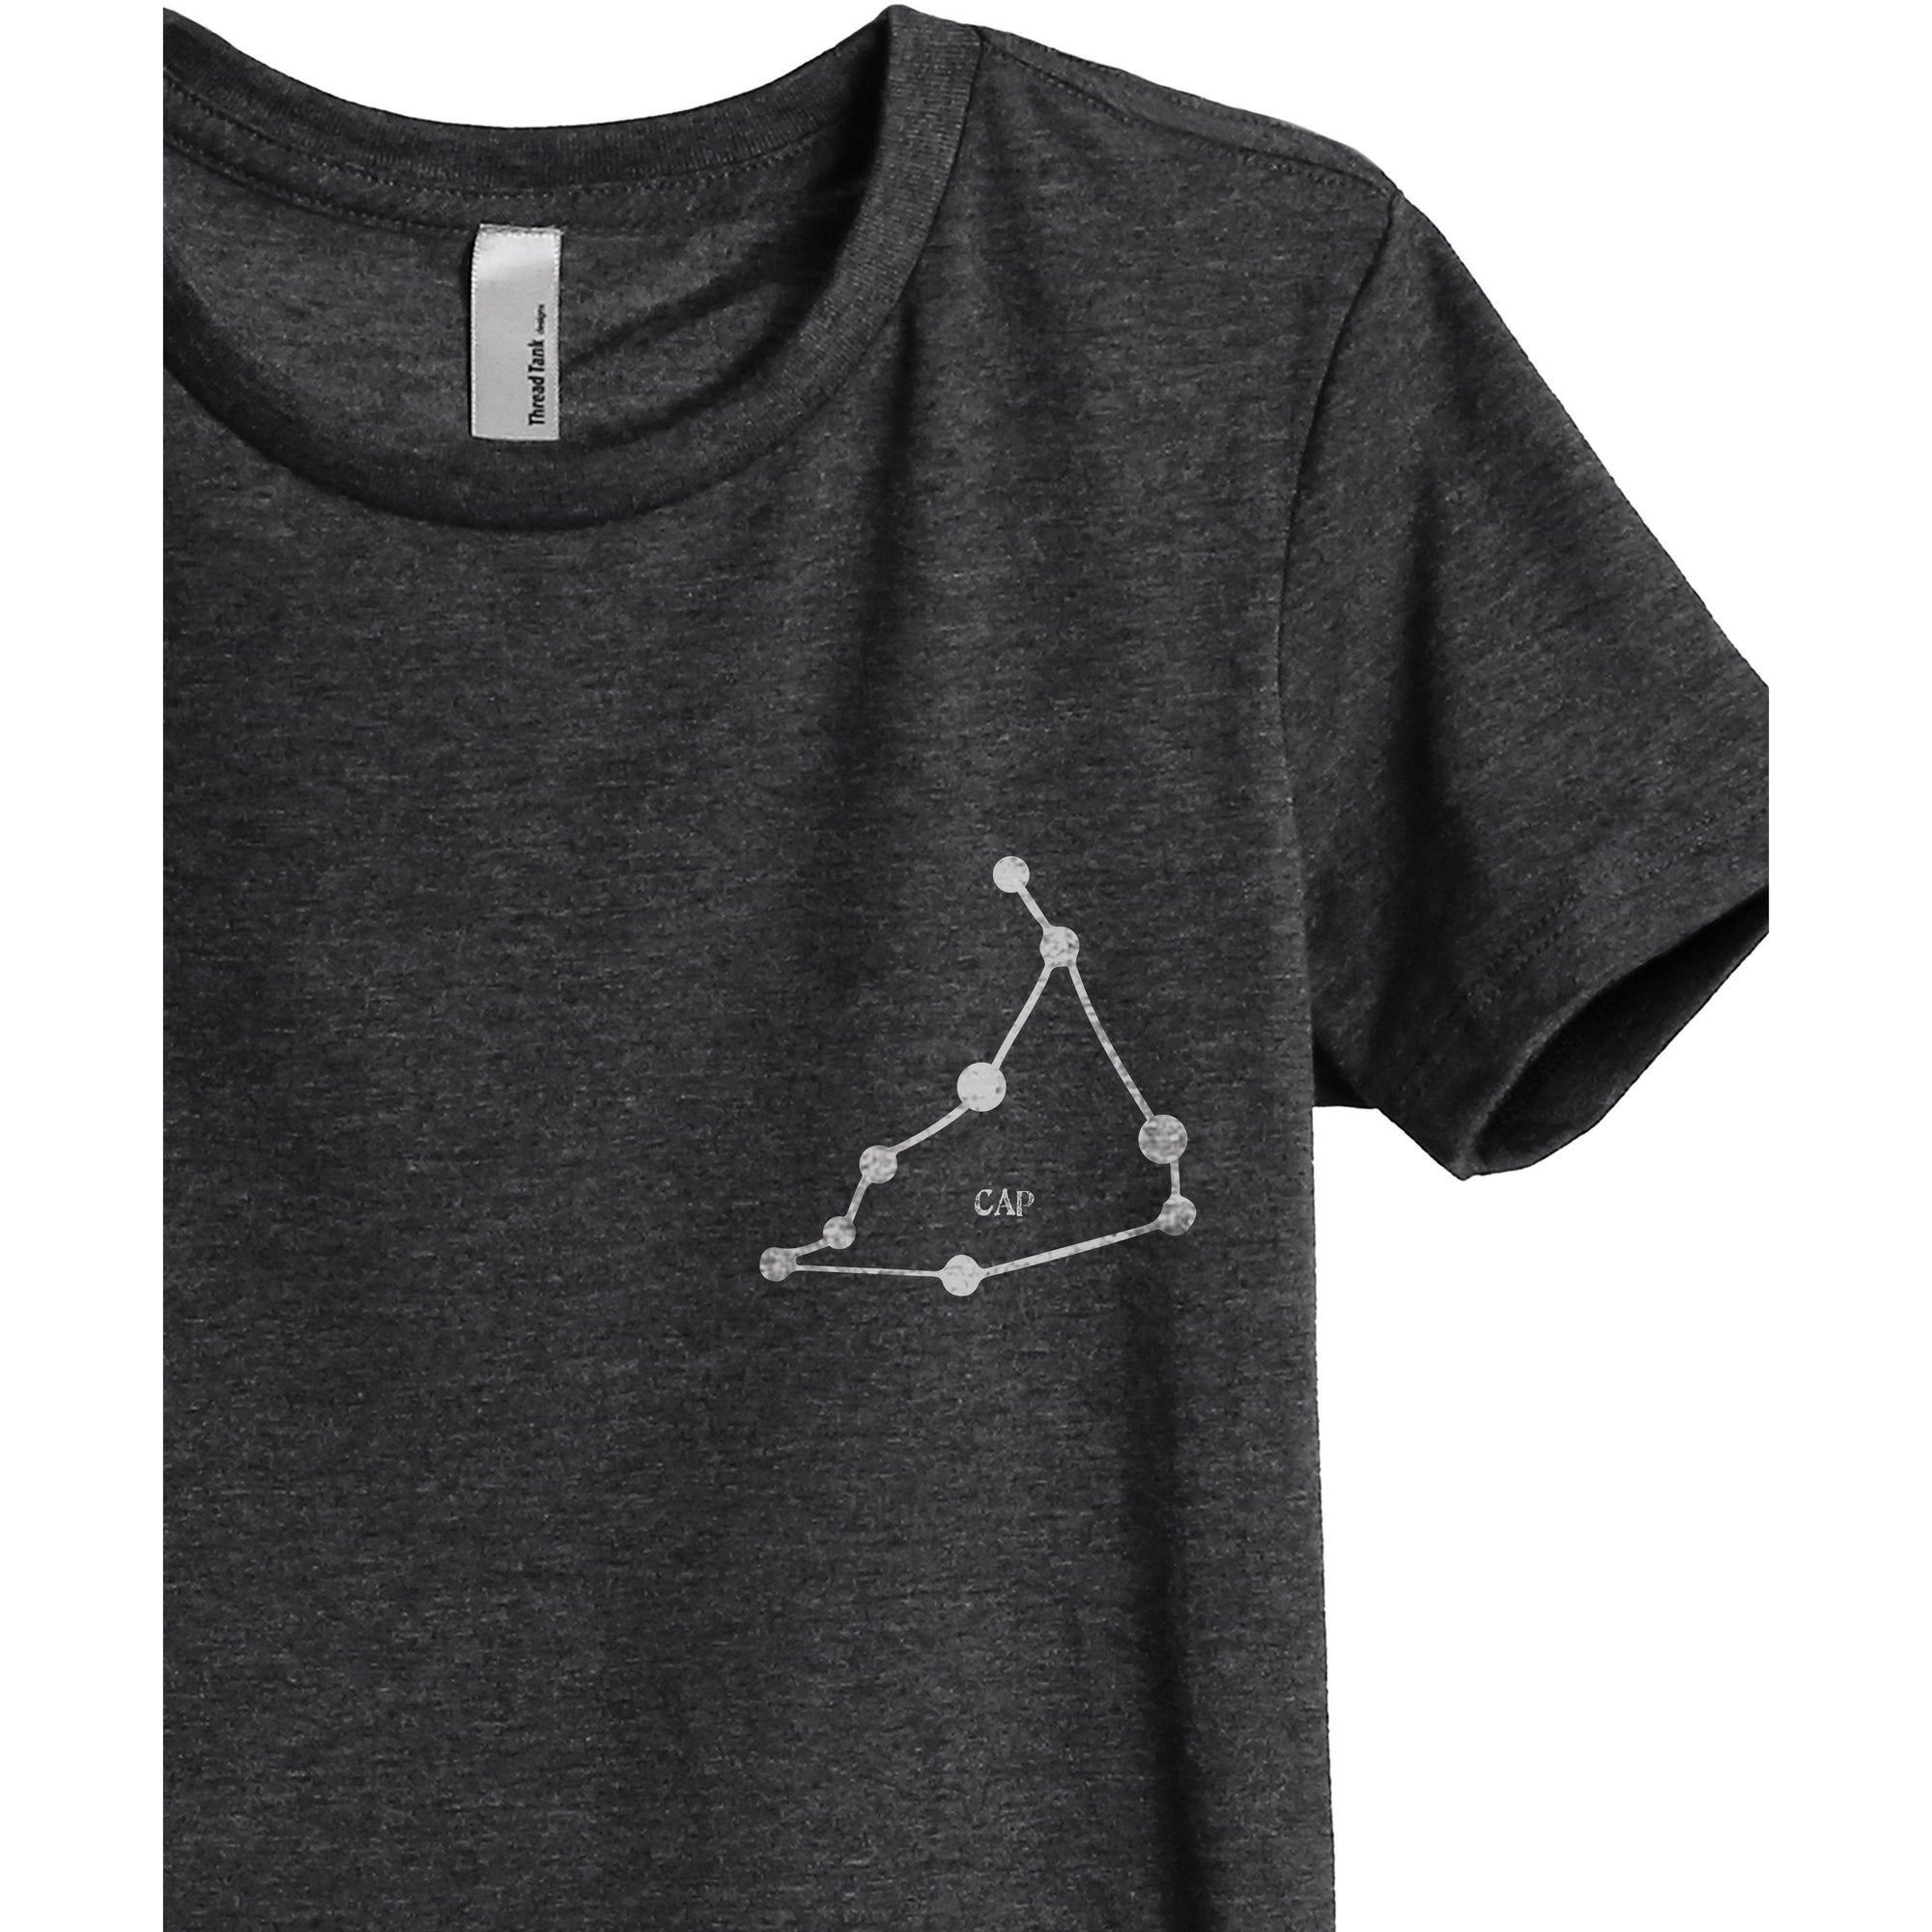 Capricorn CAP Constellation Astrology Women's Relaxed Crewneck T-Shirt Top Tee Charcoal Grey
